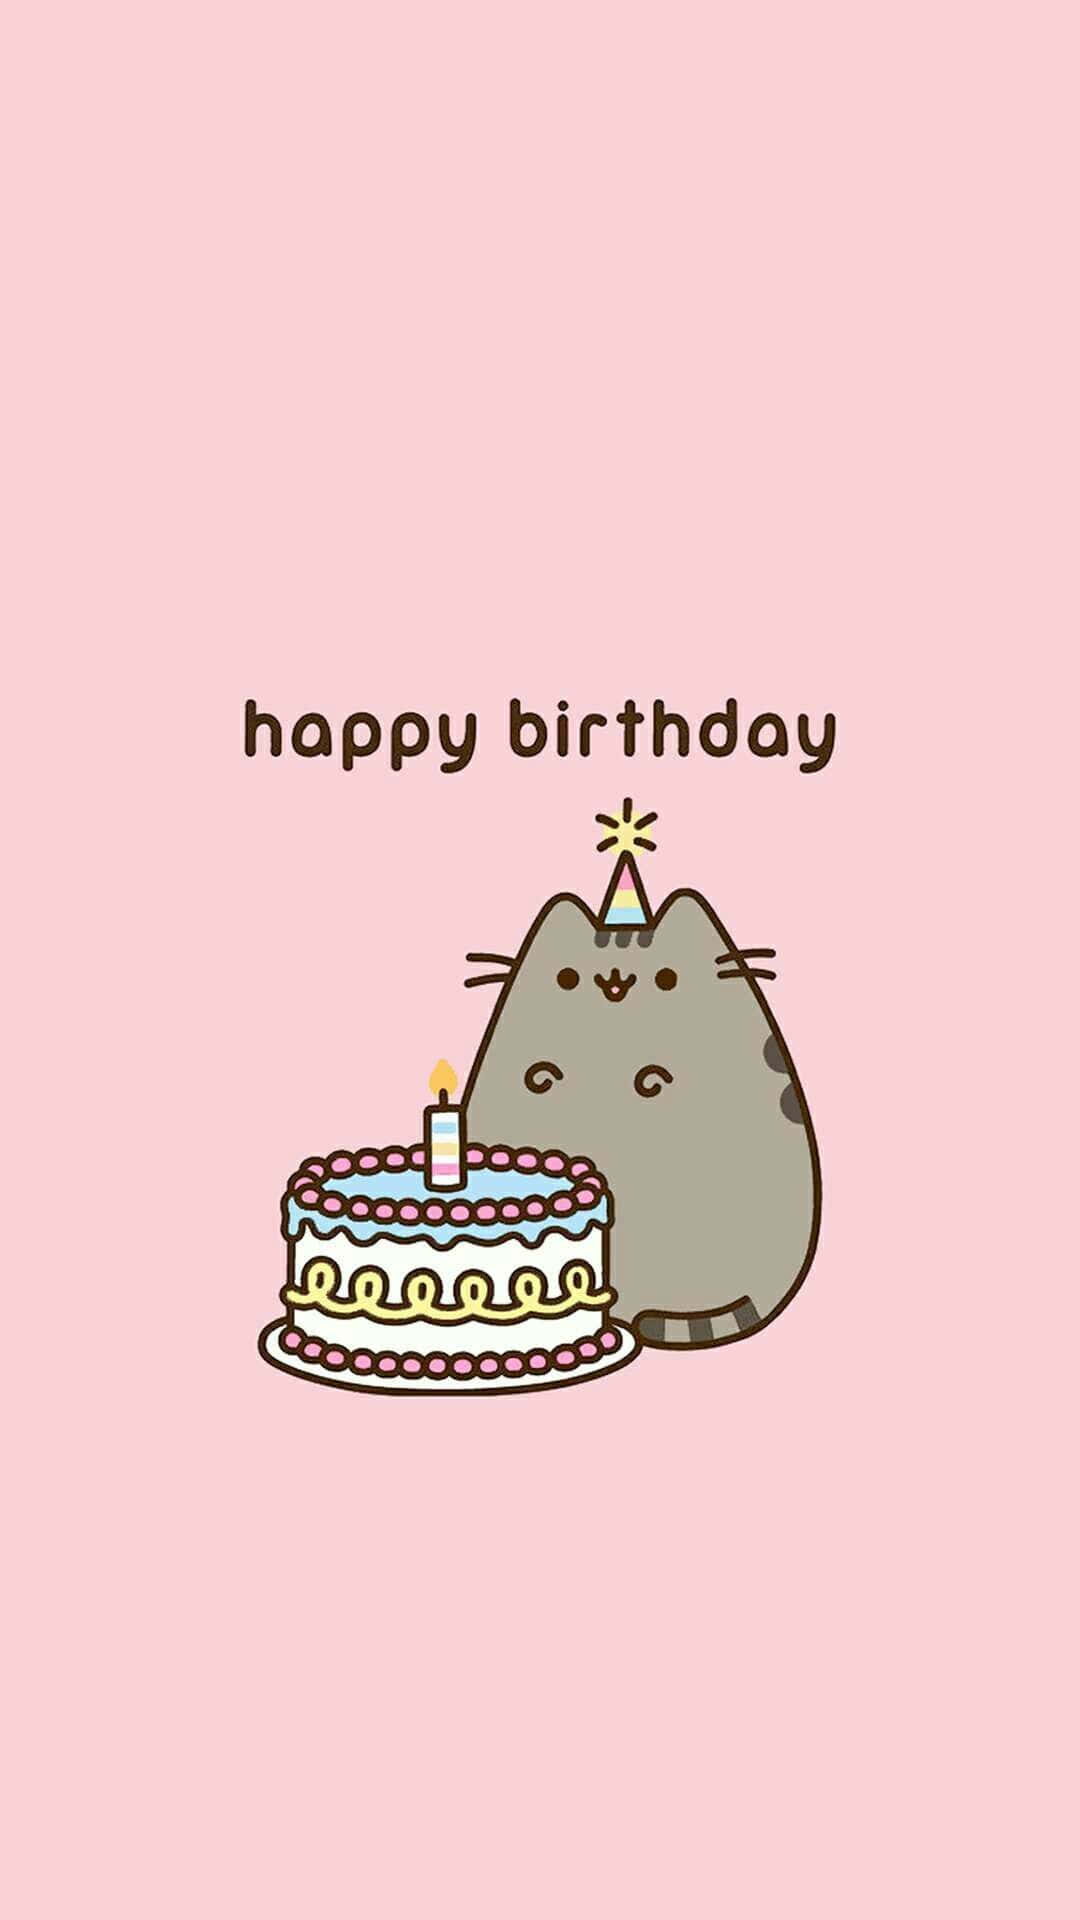 Pusheen Cat Happy Birthday Cake iPhone Wallpaper